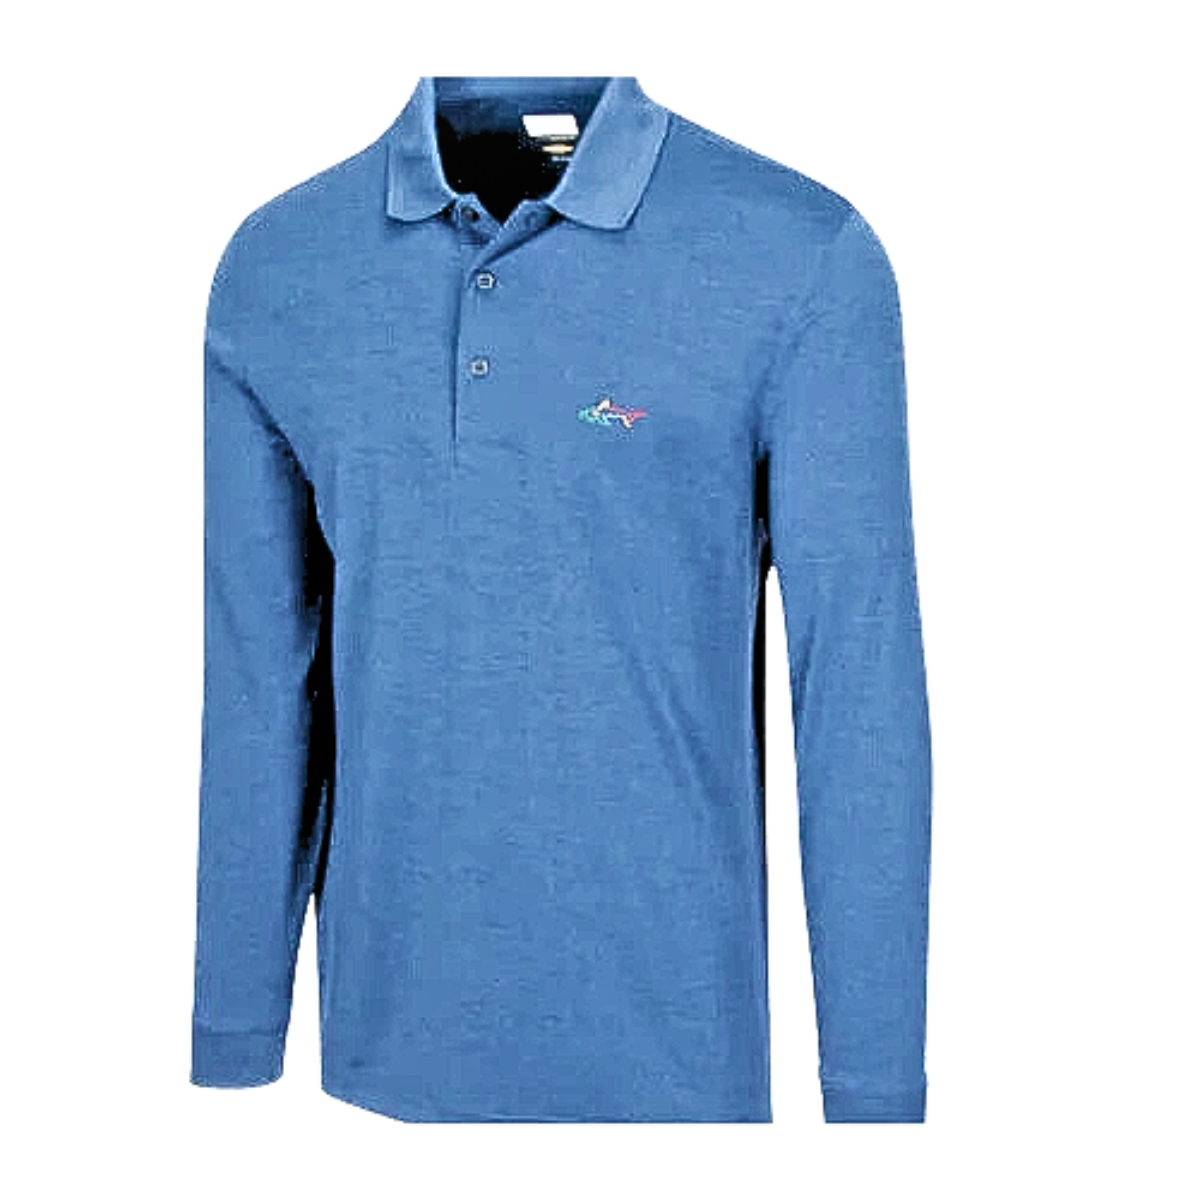 Greg Norman Long Sleeve Space Dye Tshirt  (US Size)